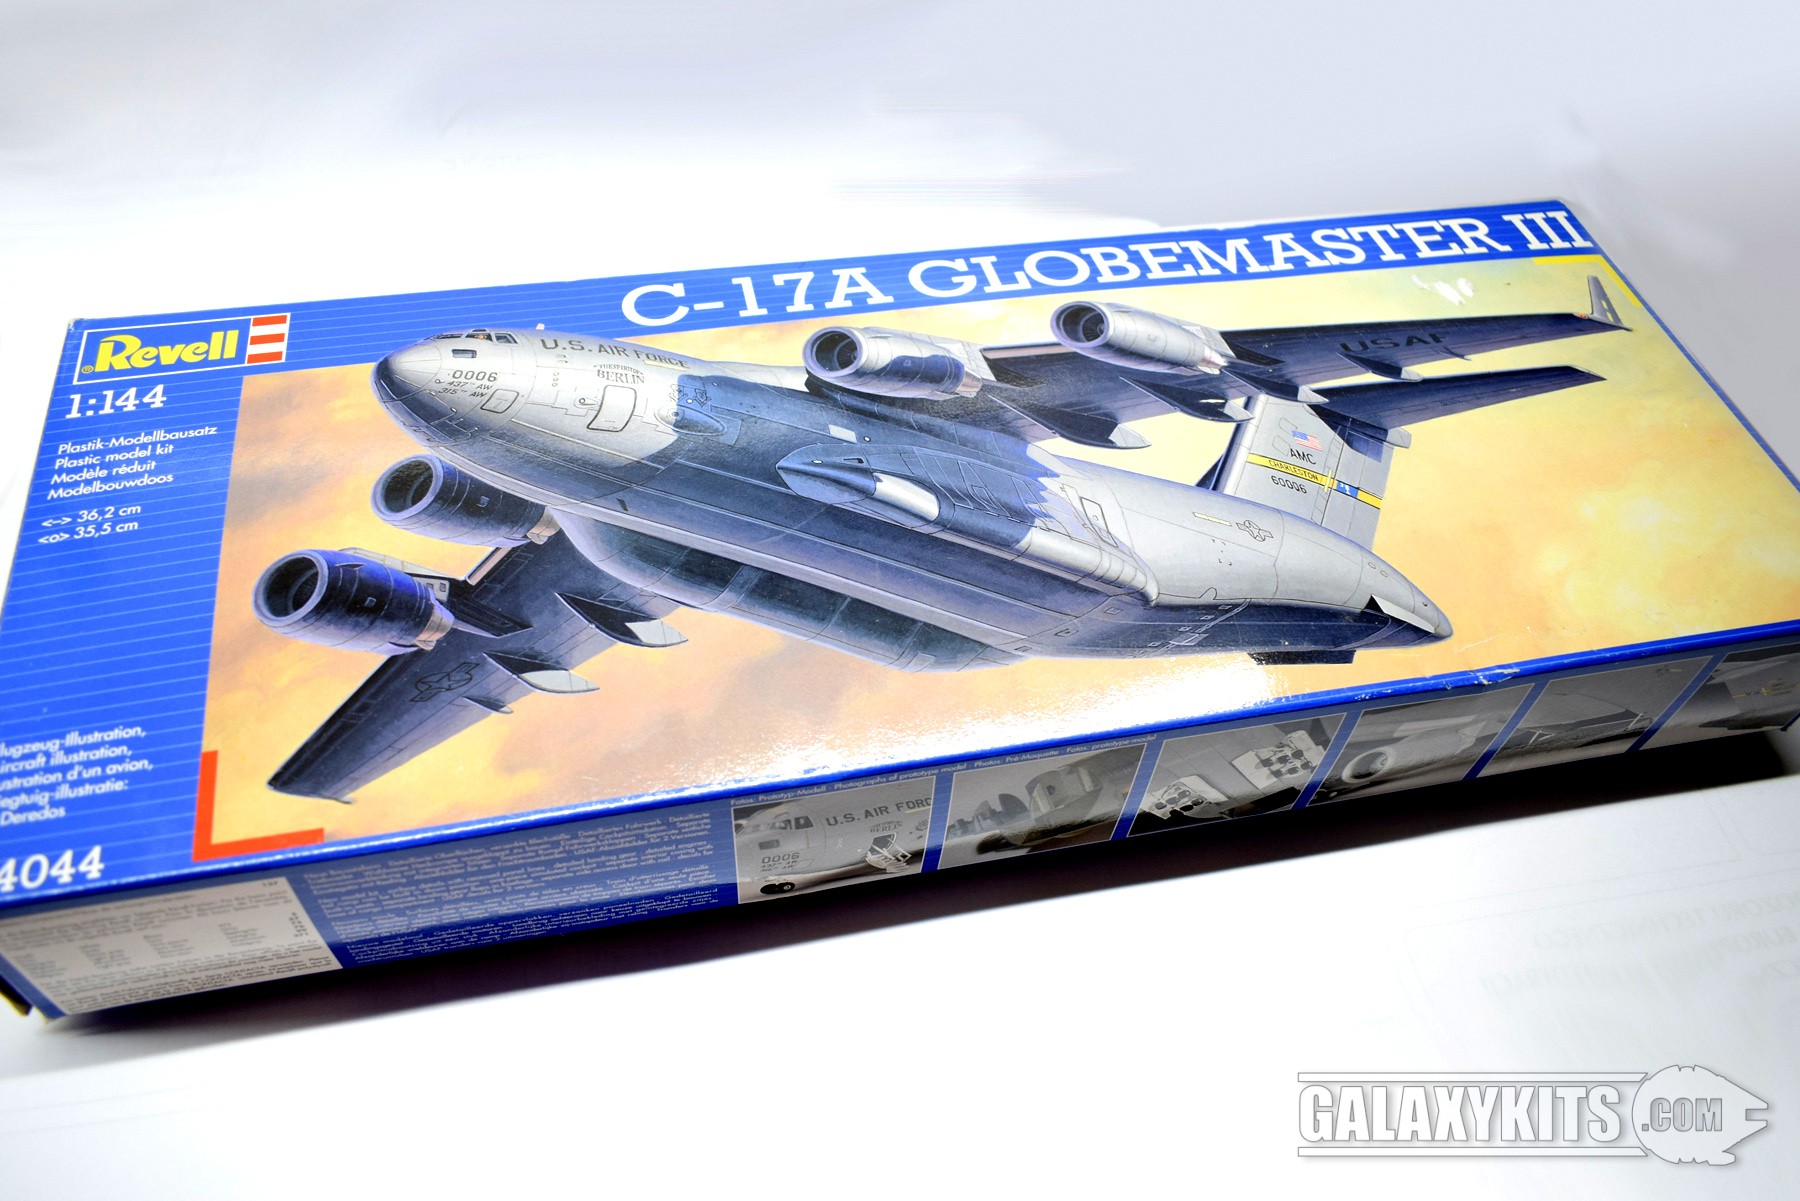 C-17A Globemaster III (04044) / 1:144 / Revell